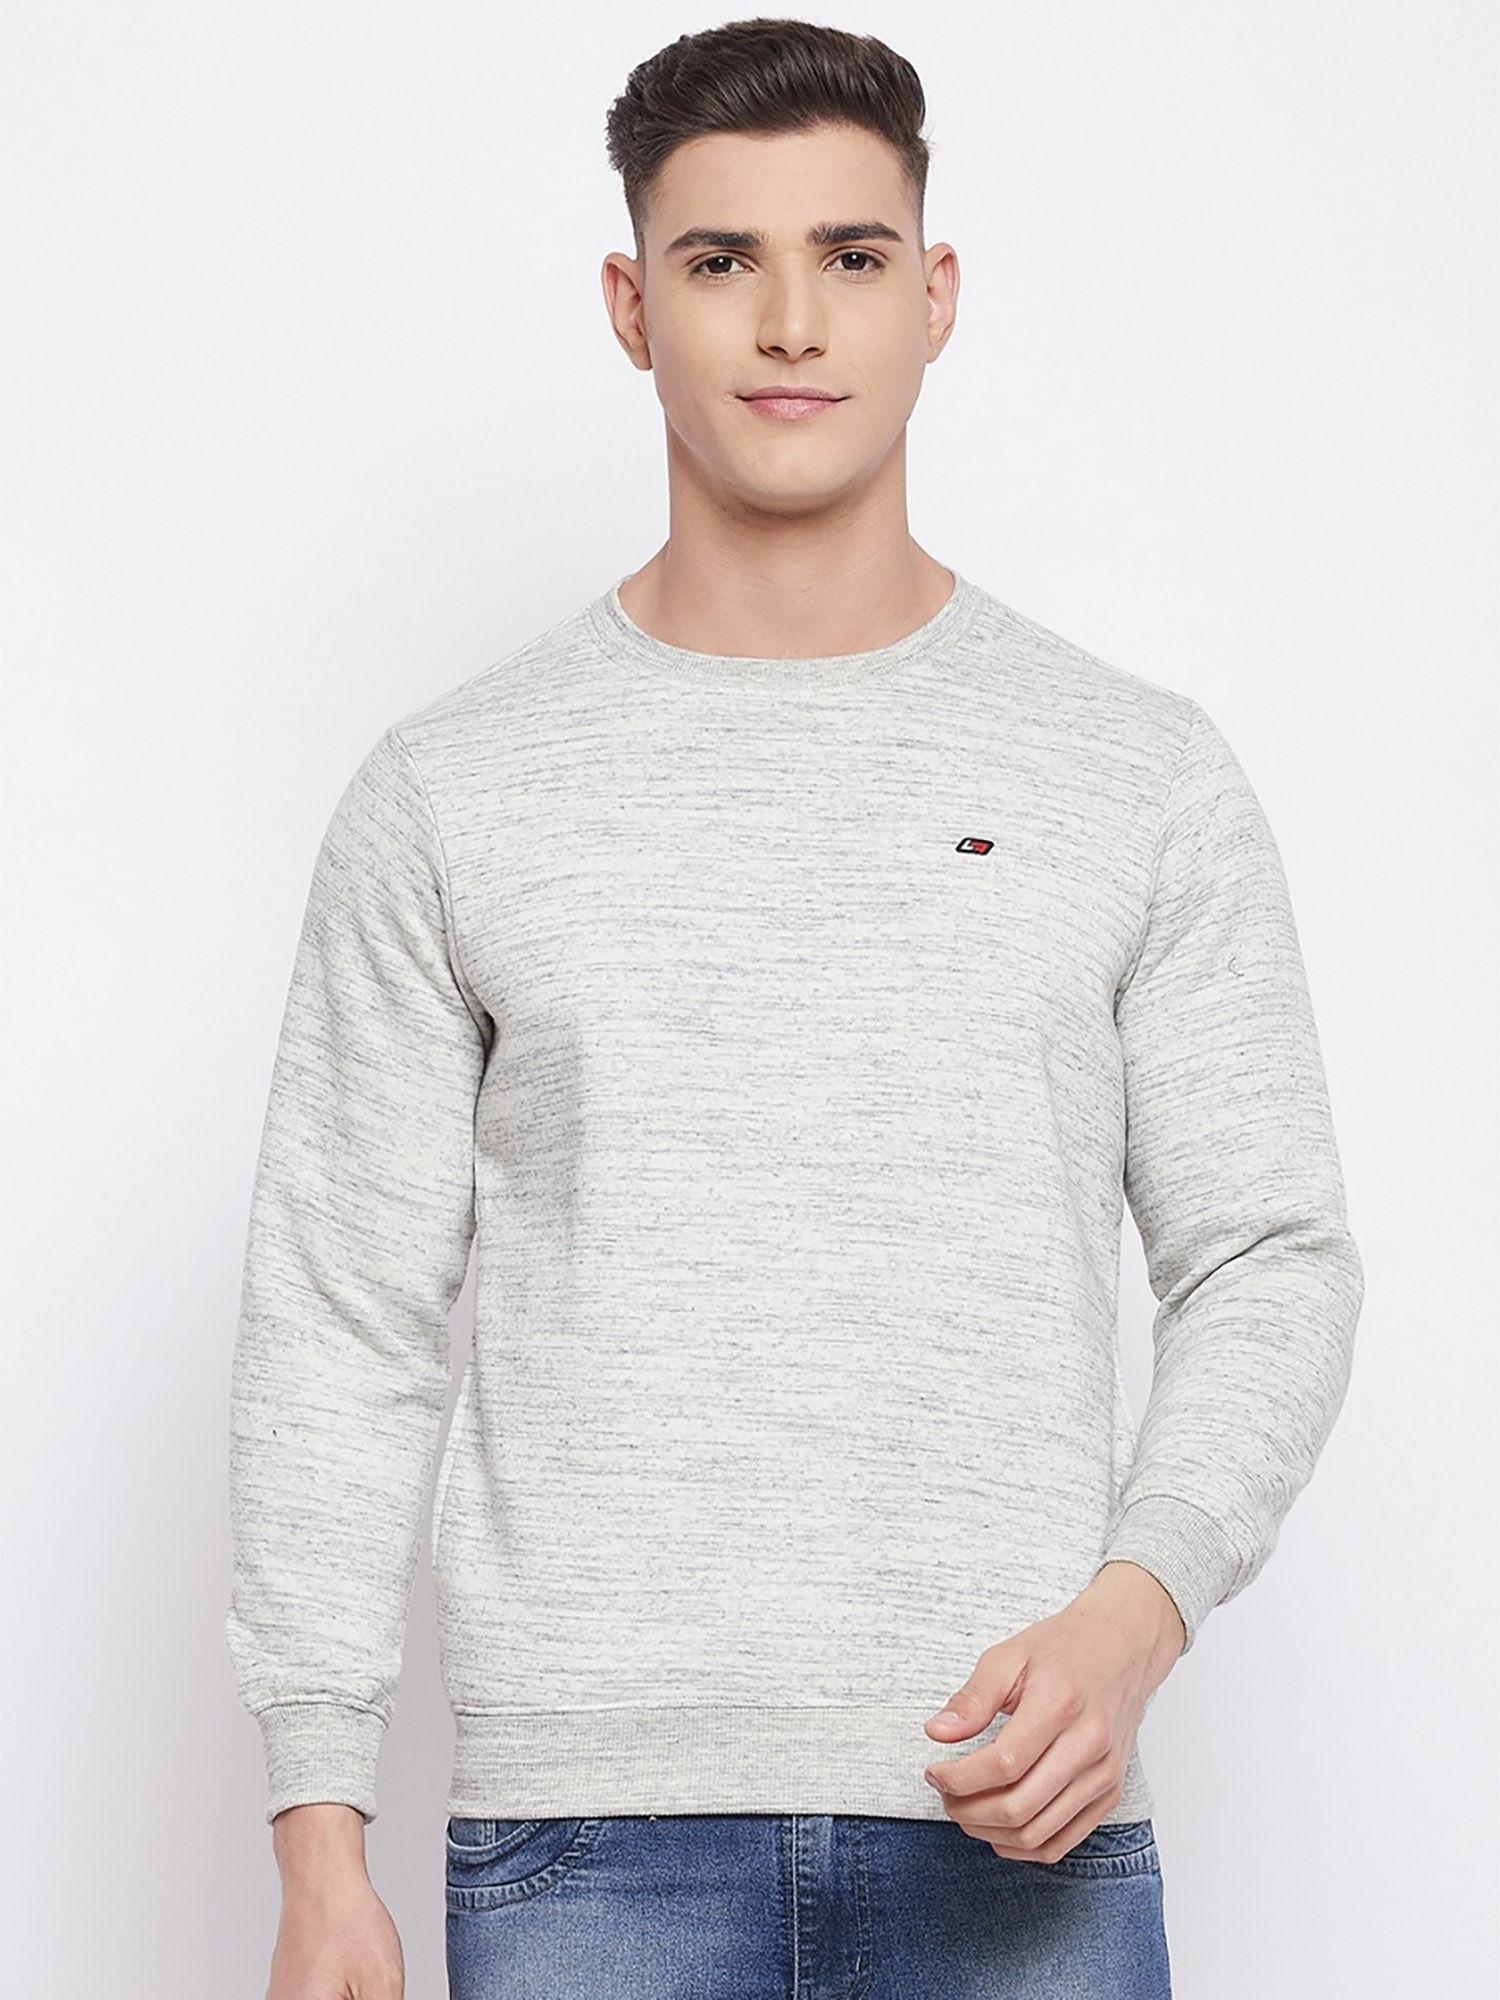 mens round neck full sleeve sweatshirt